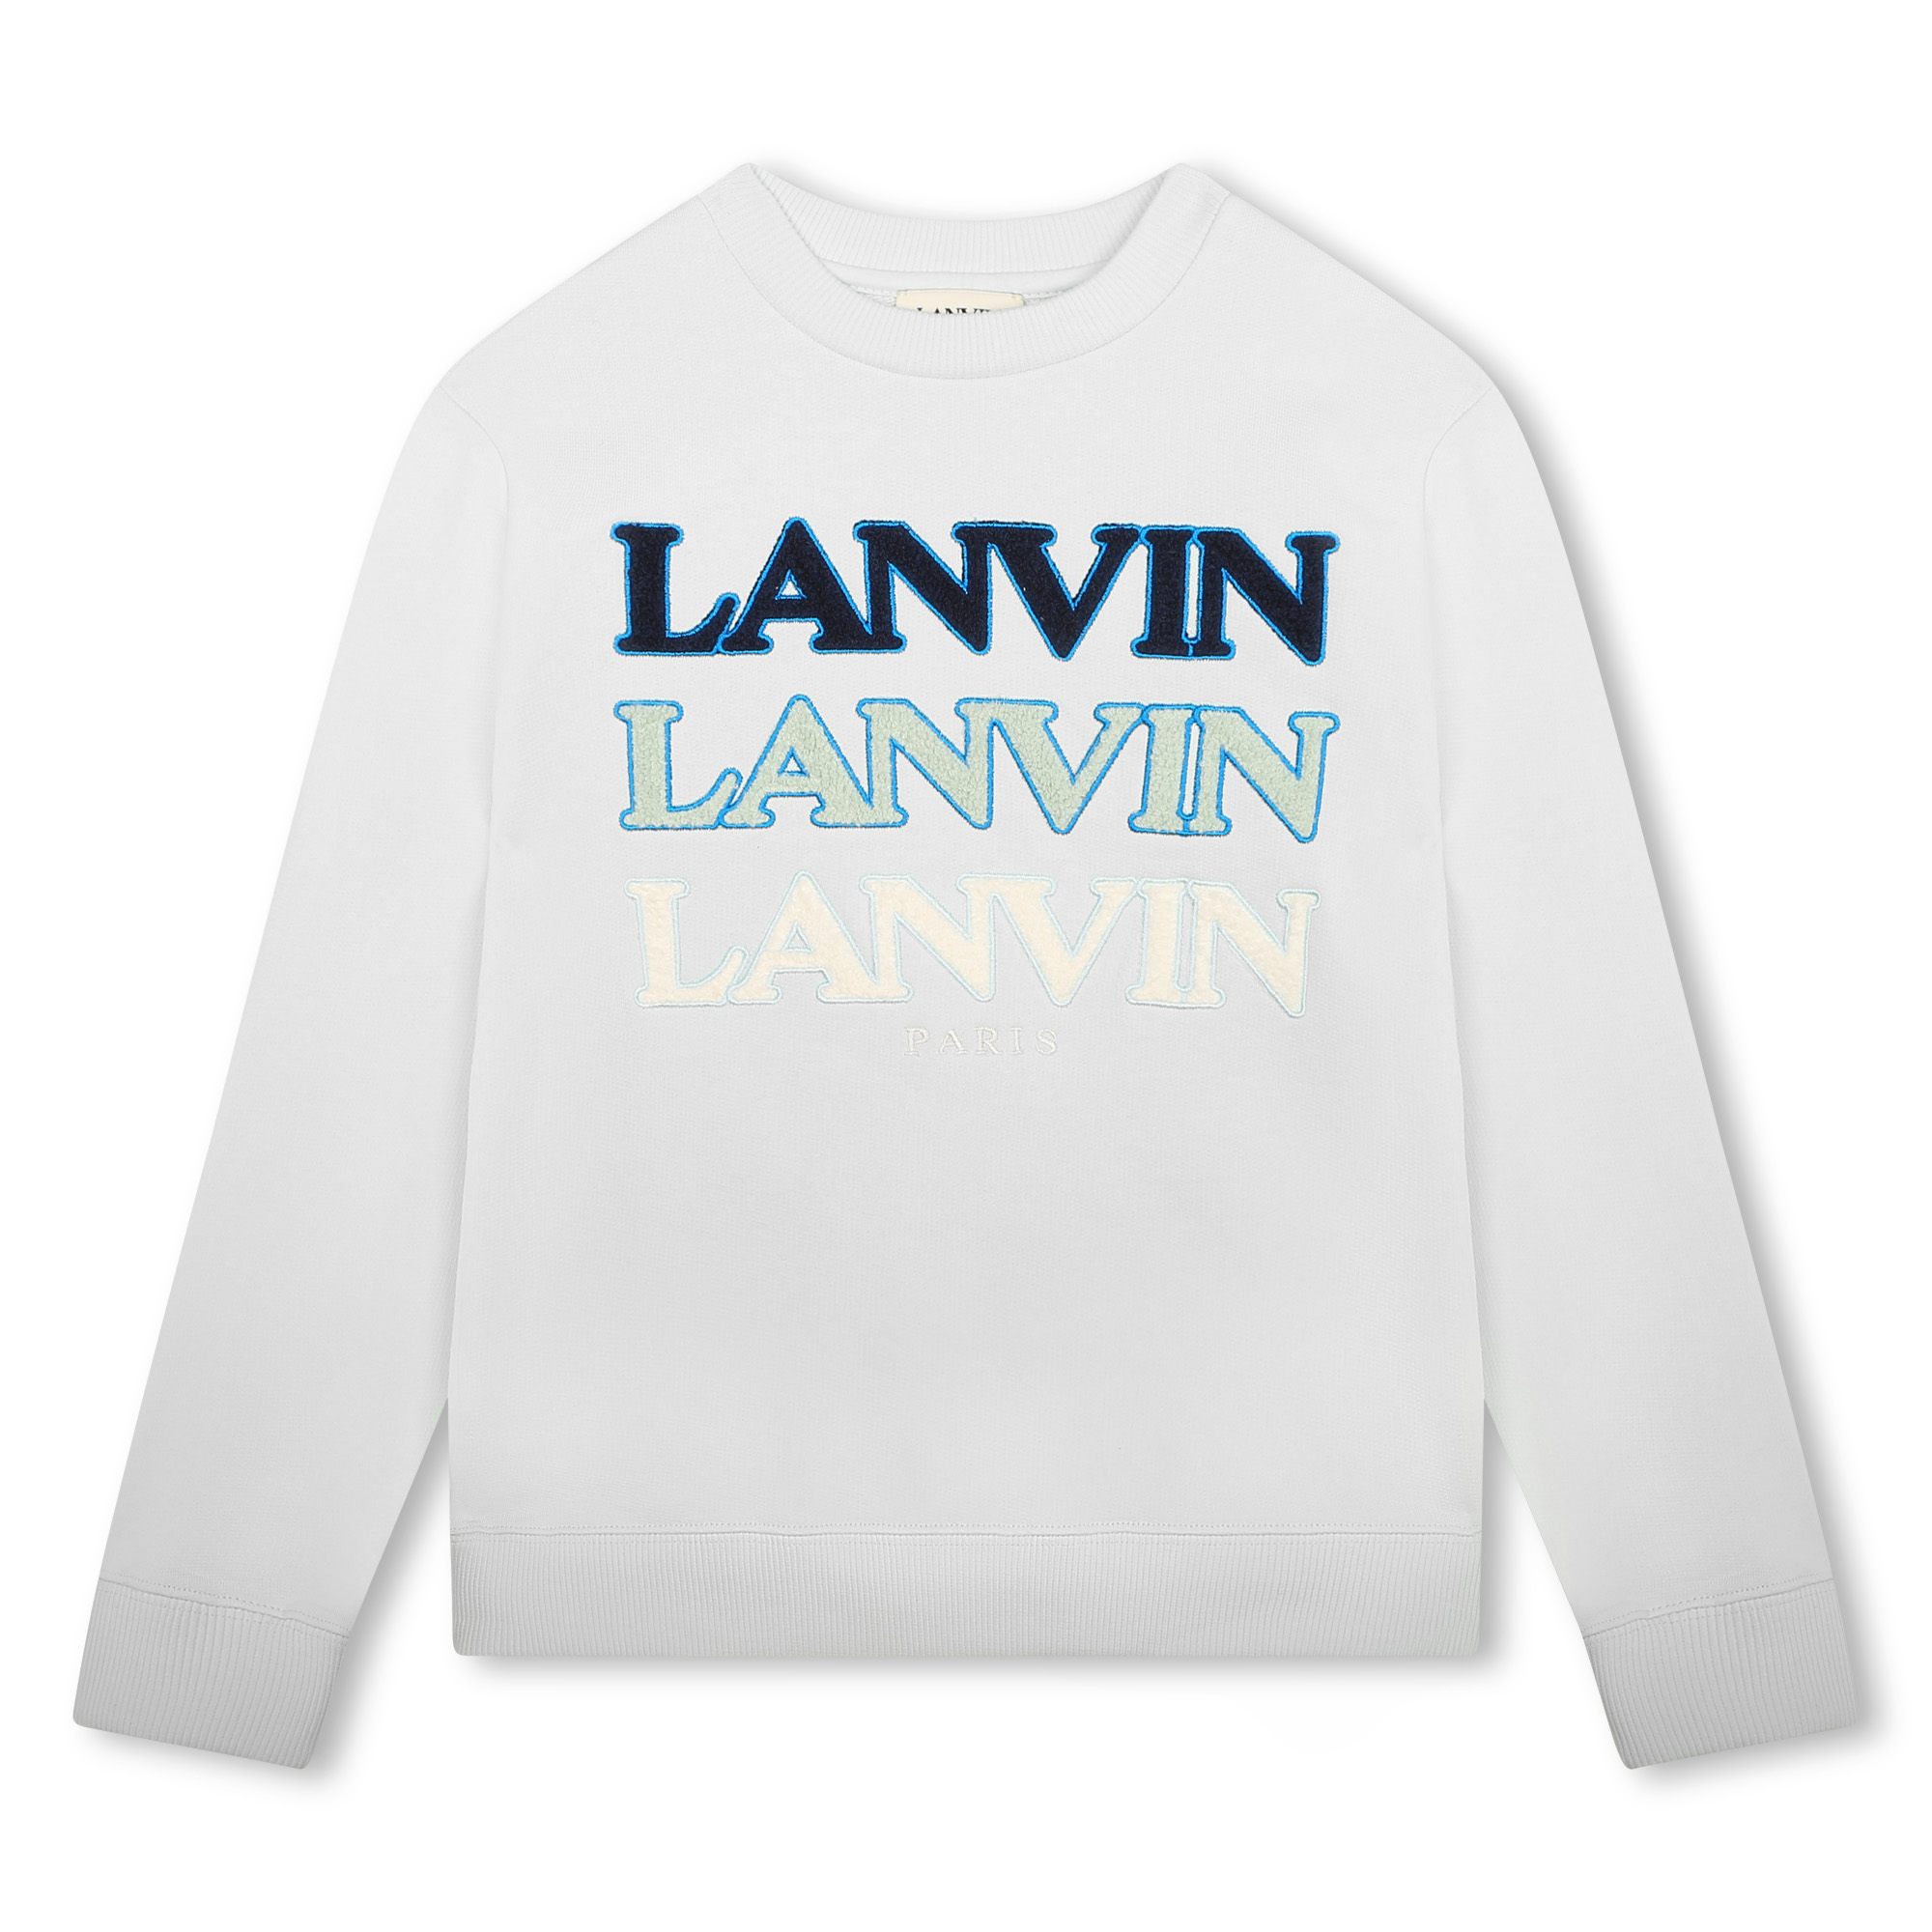 Cotton fleece sweatshirt LANVIN for BOY